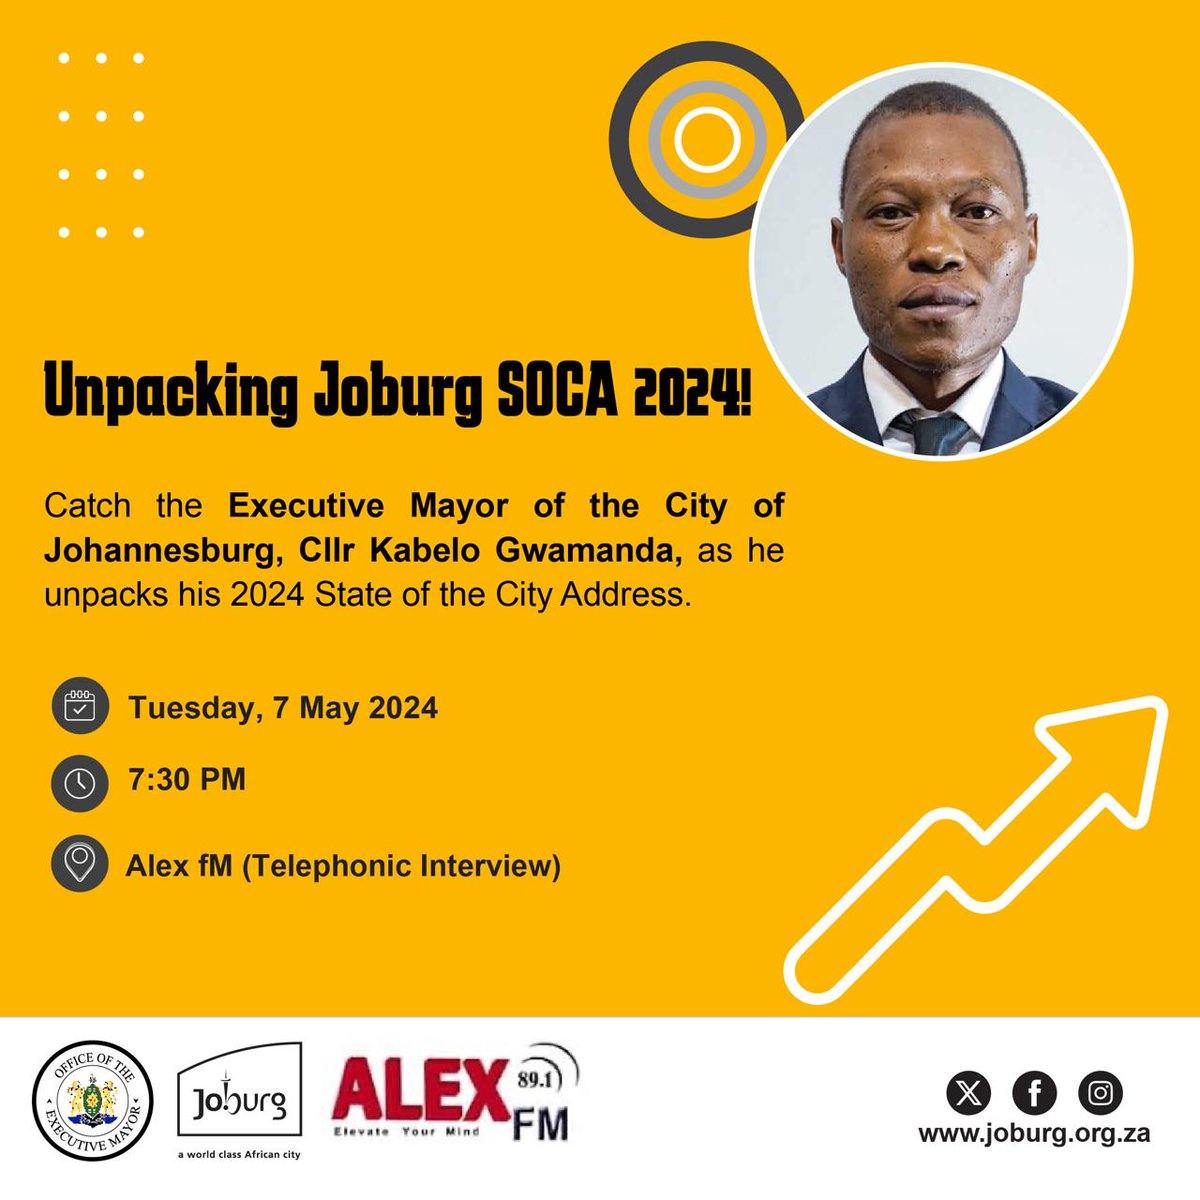 #JoburgSOCA2024 Tune in and listen to Executive Mayor Cllr @KabeloGwamanda unpack the SOCA. #JoburgUpdates #JoburgServices